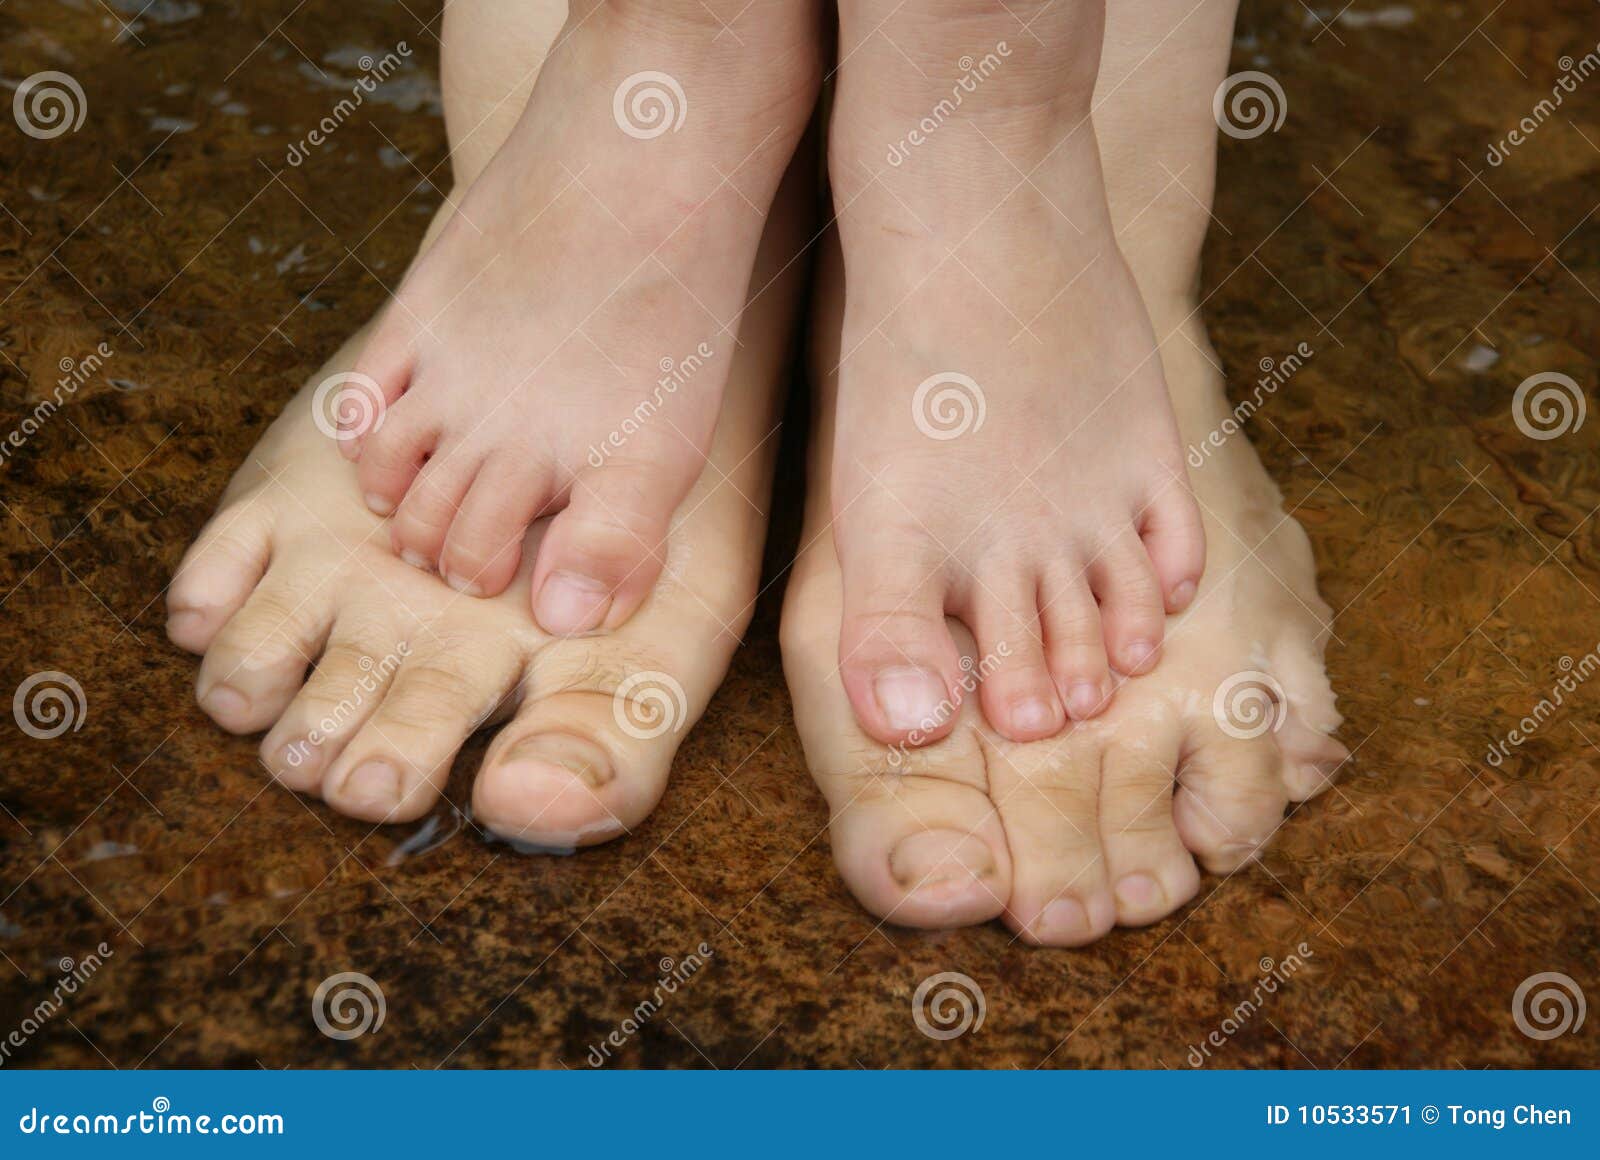 feet in a brook